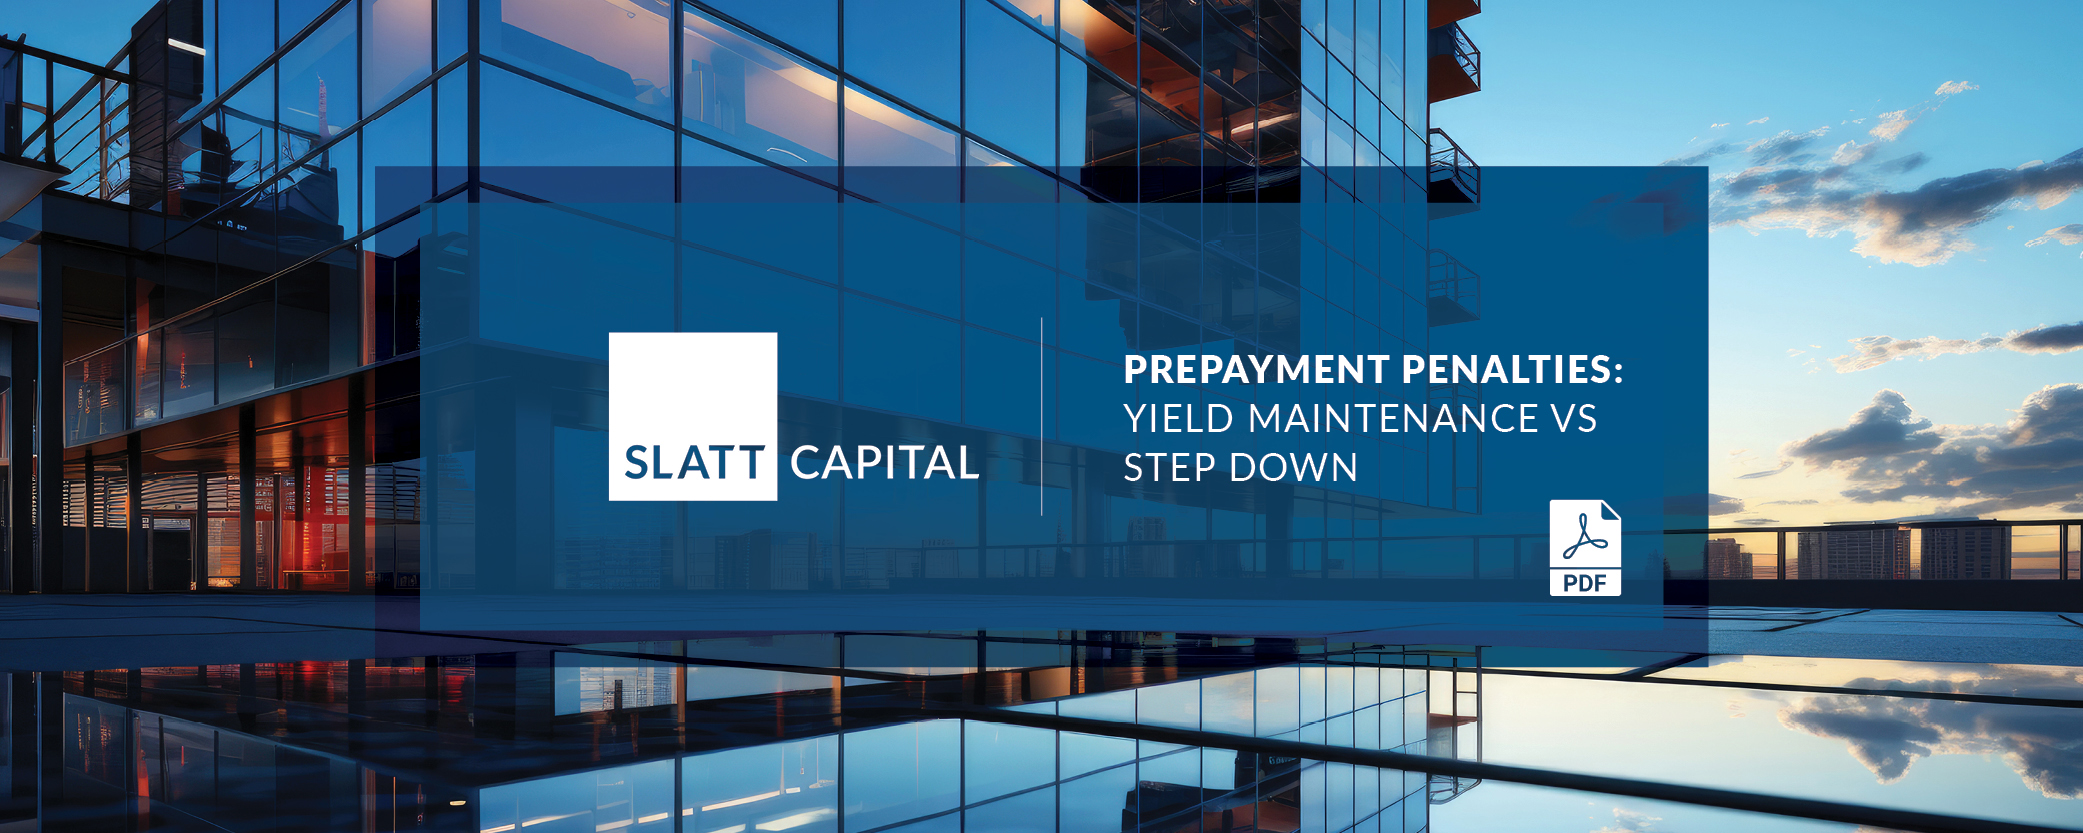 Prepayment penalties: yield maintenance vs step down